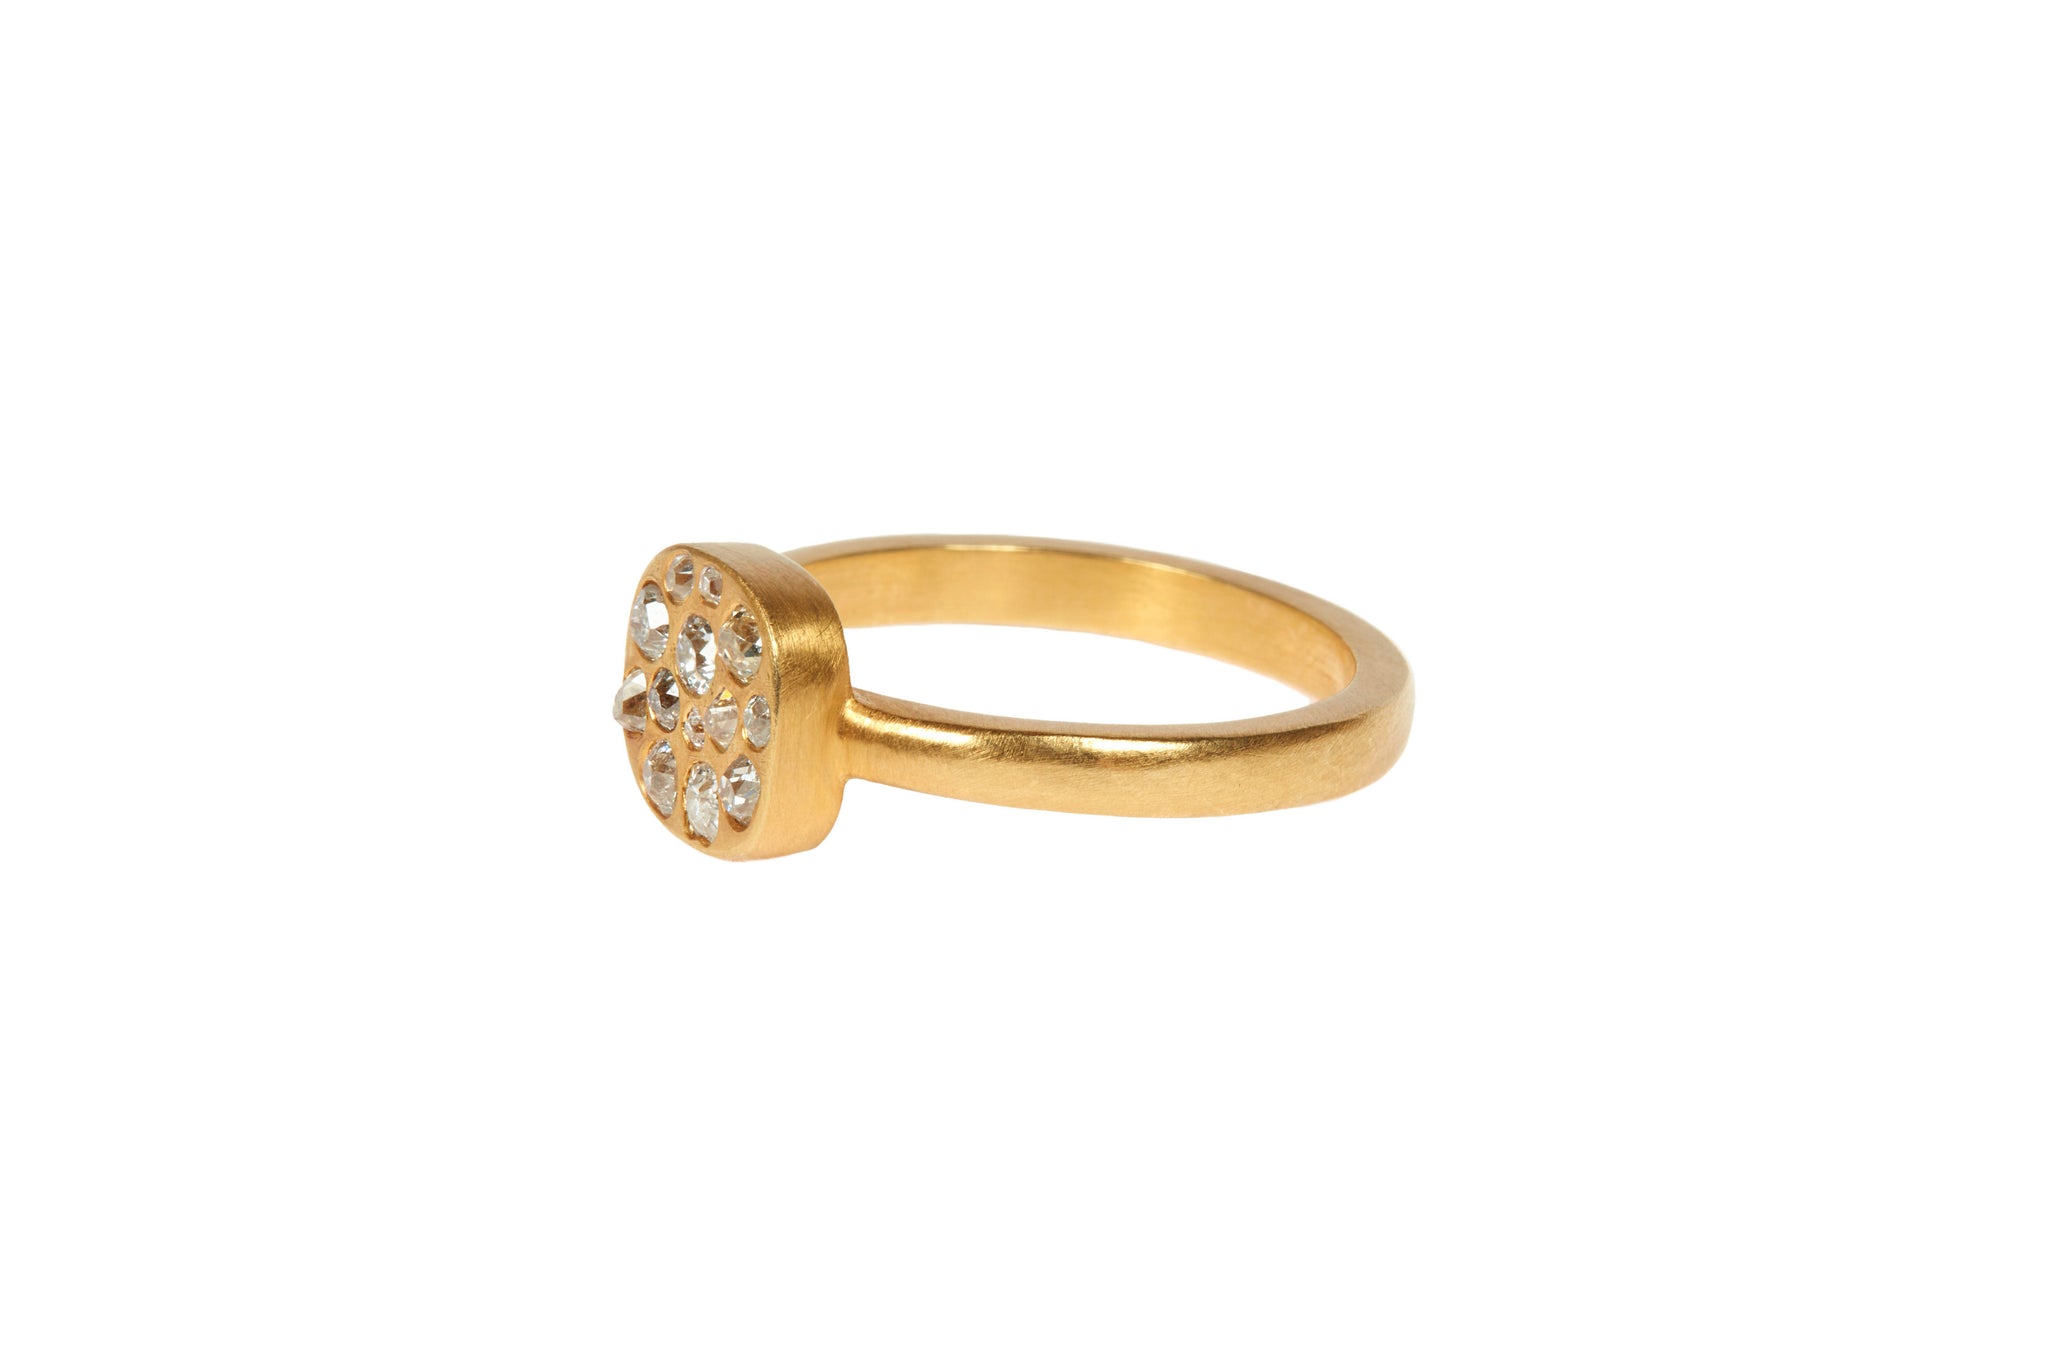 darius jewels hand made fine jewelry diamond signet ring v.3 18k yellow gold antique old mine cut diamonds darius khonsary